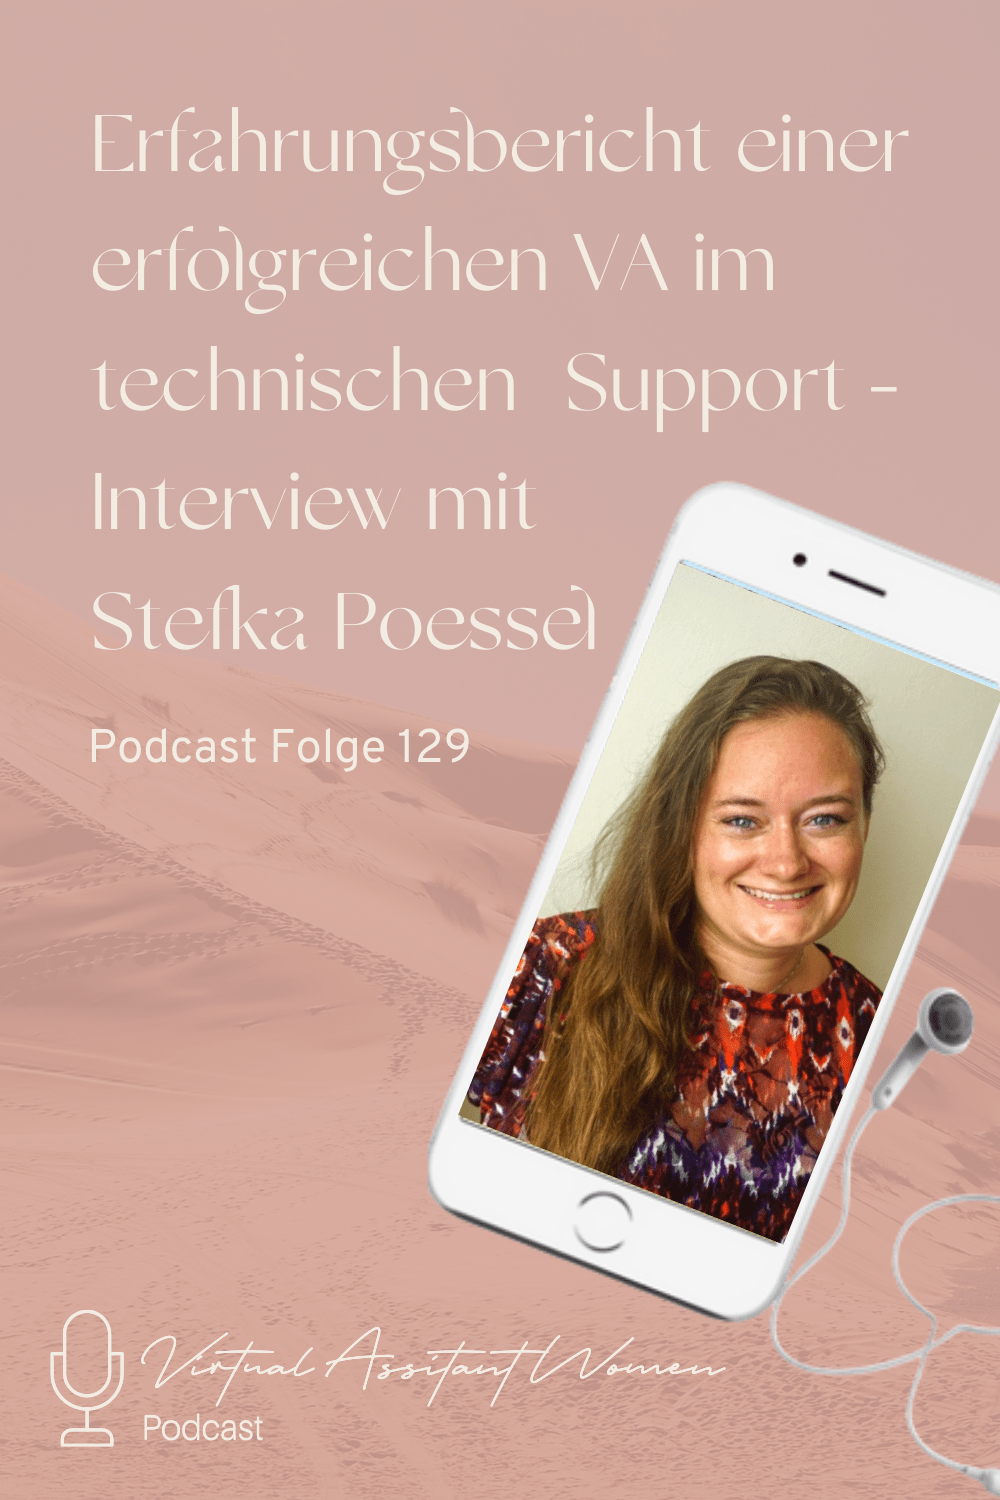 Pin Stefka Poessel_technischer Support_Podcastfolge 129